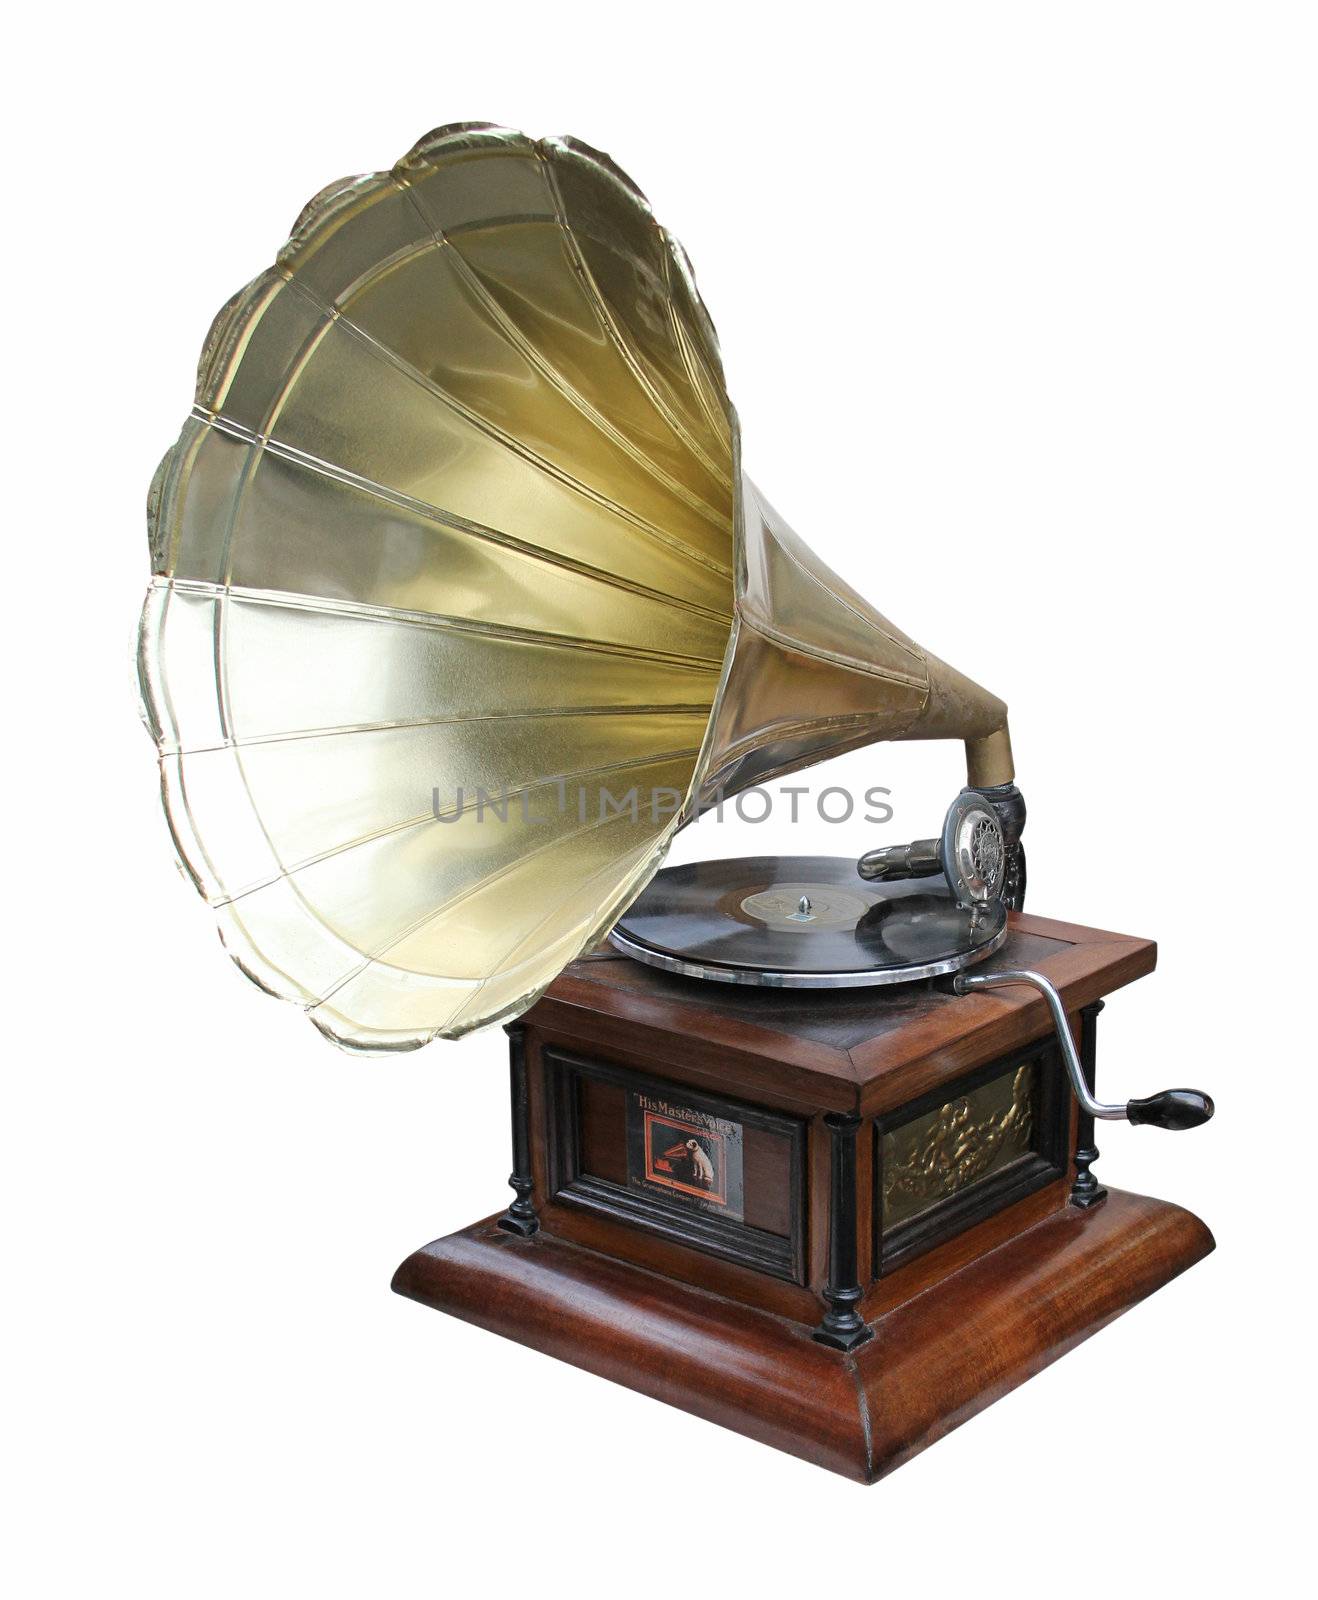 gramophone by gallofoto